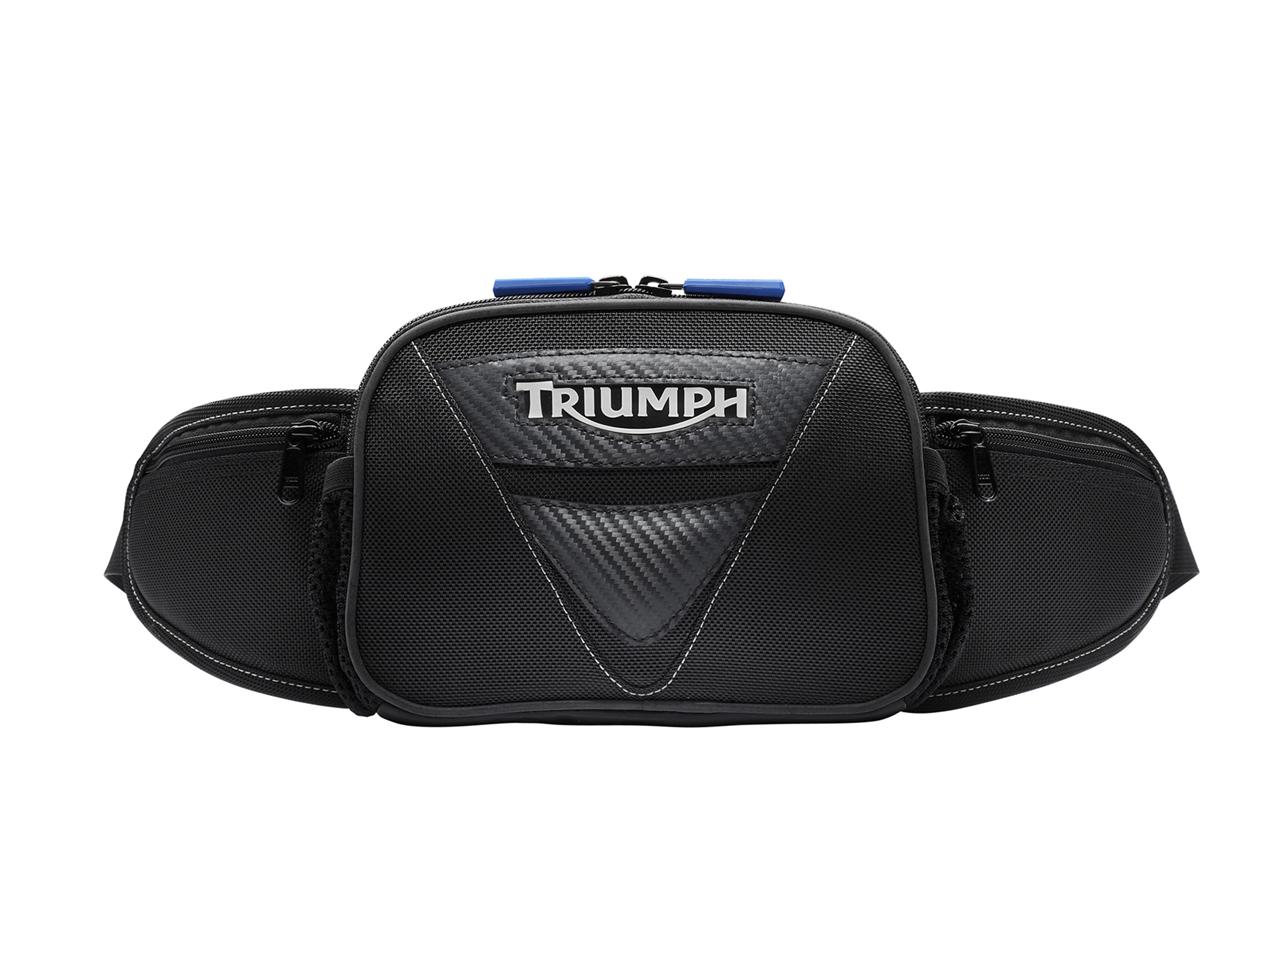 Riñonera porta casco de Triumph: Práctico y útil porta casco